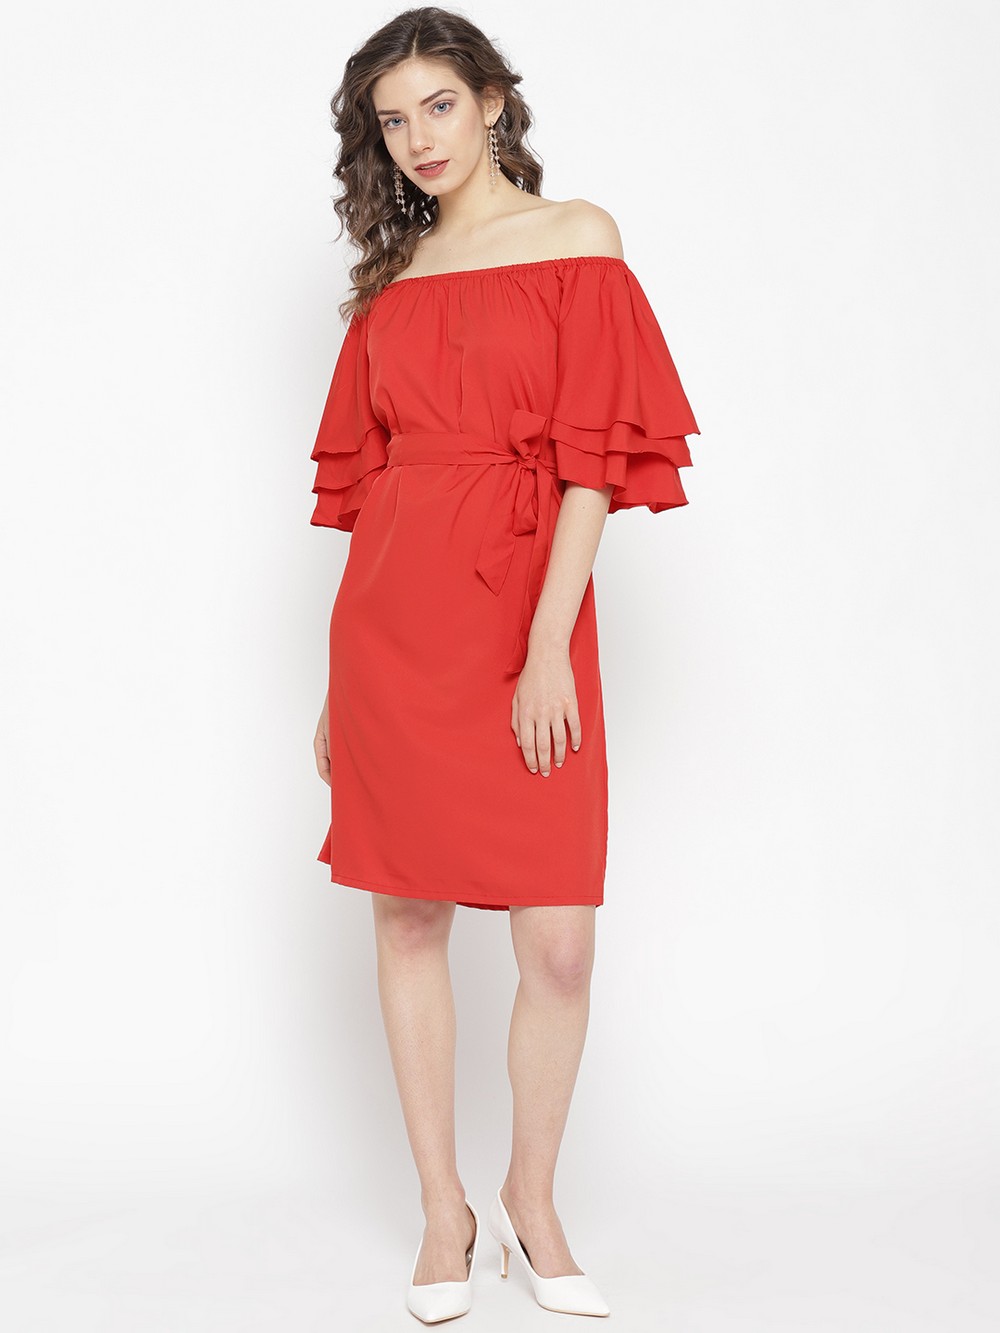 Sparkly Tulle Red A-line Off Shoulder Prom Dresses MP761 | Musebridals